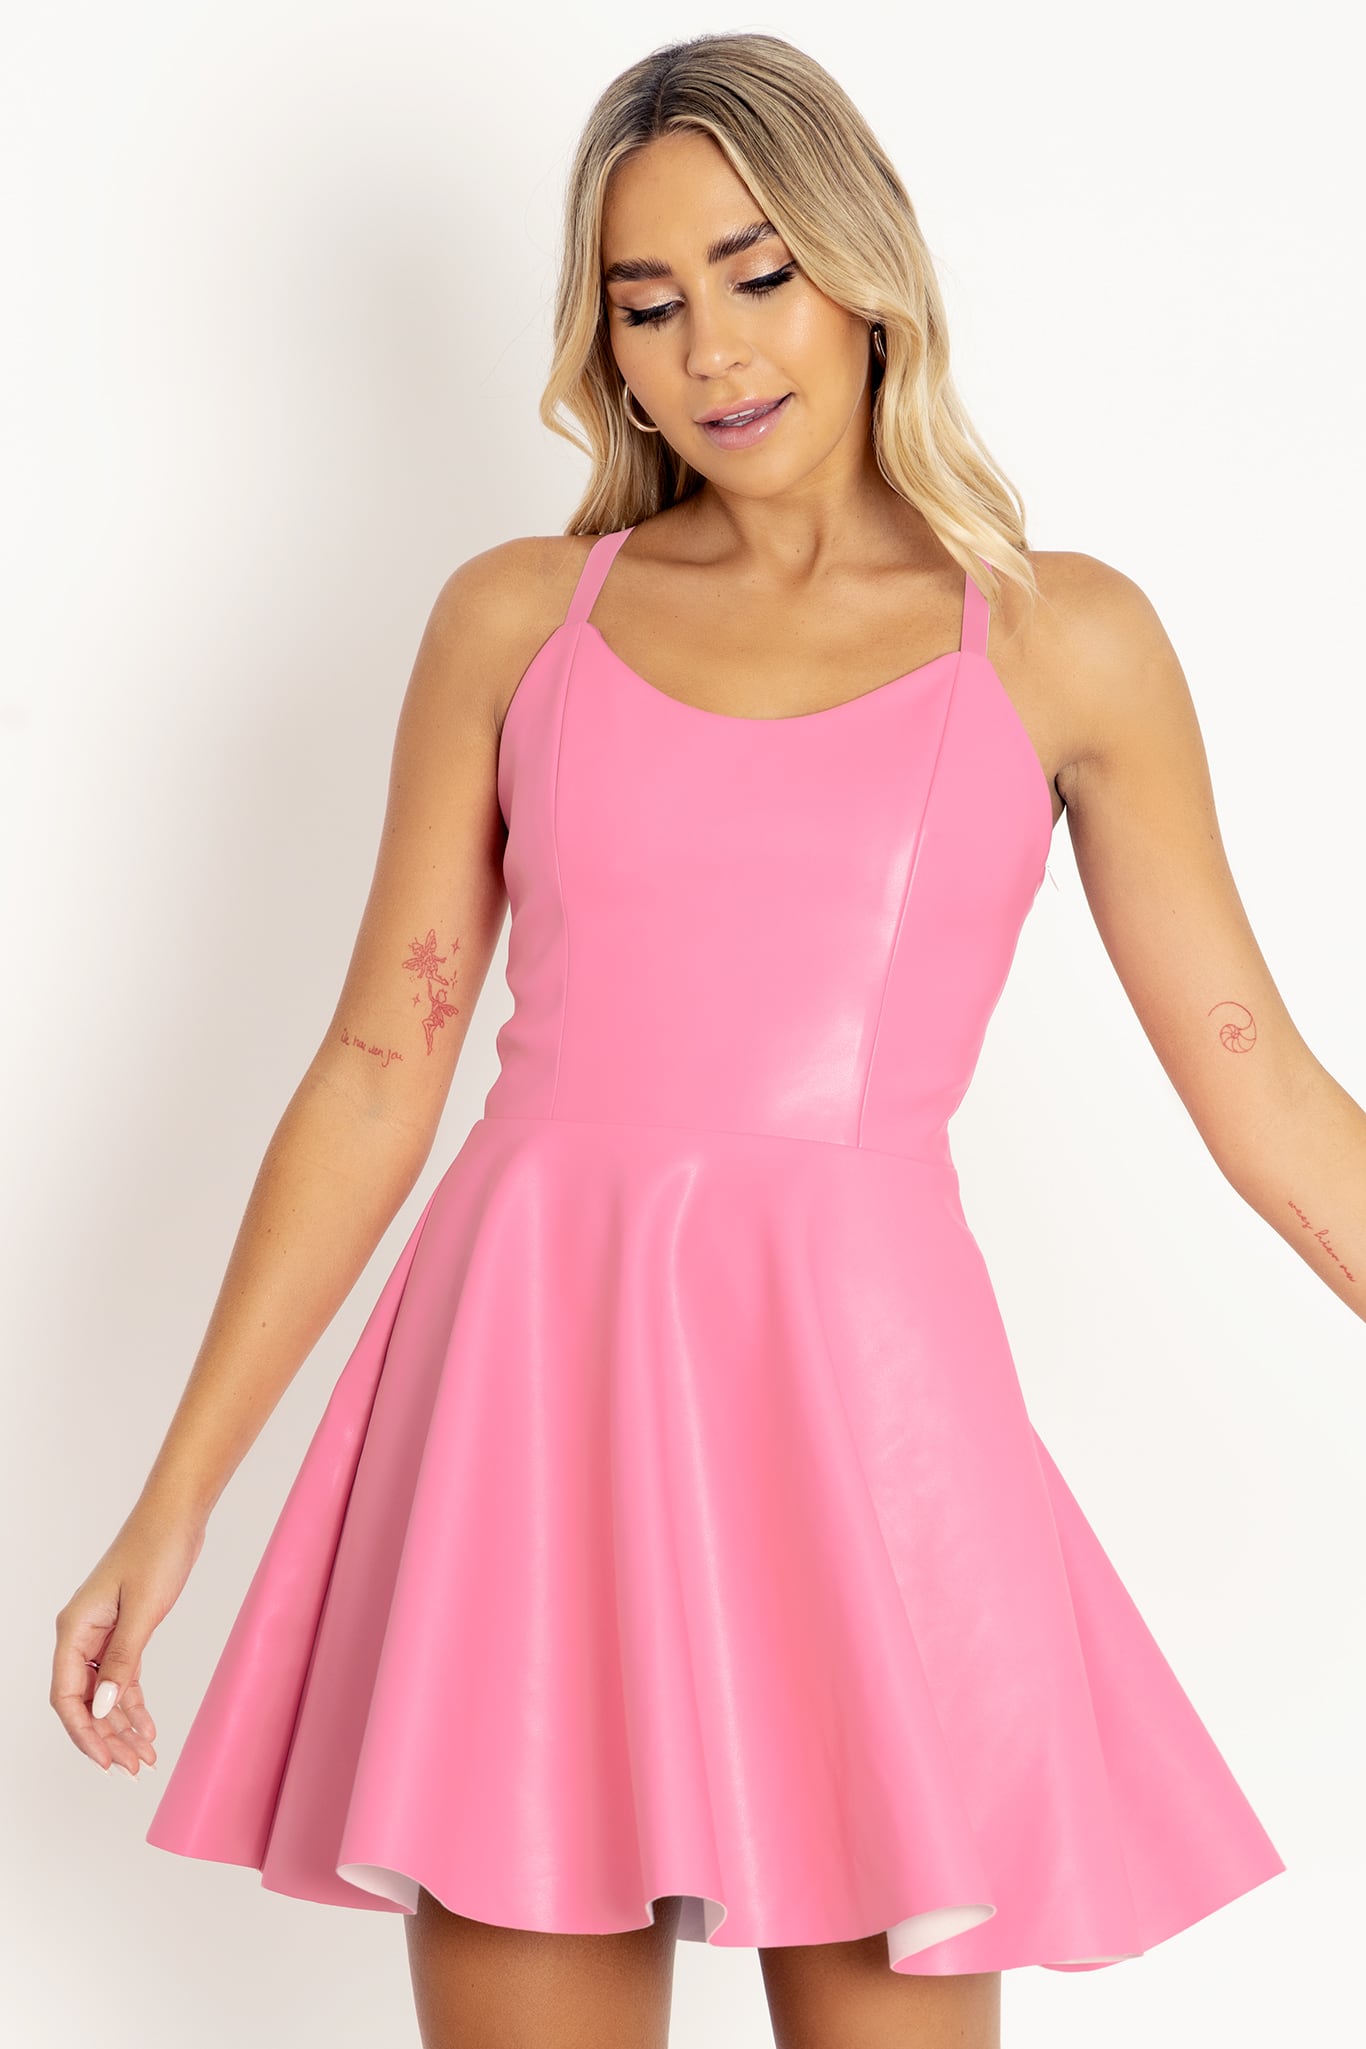 Bubblegum Pink Moto Strappy Dress - Limited